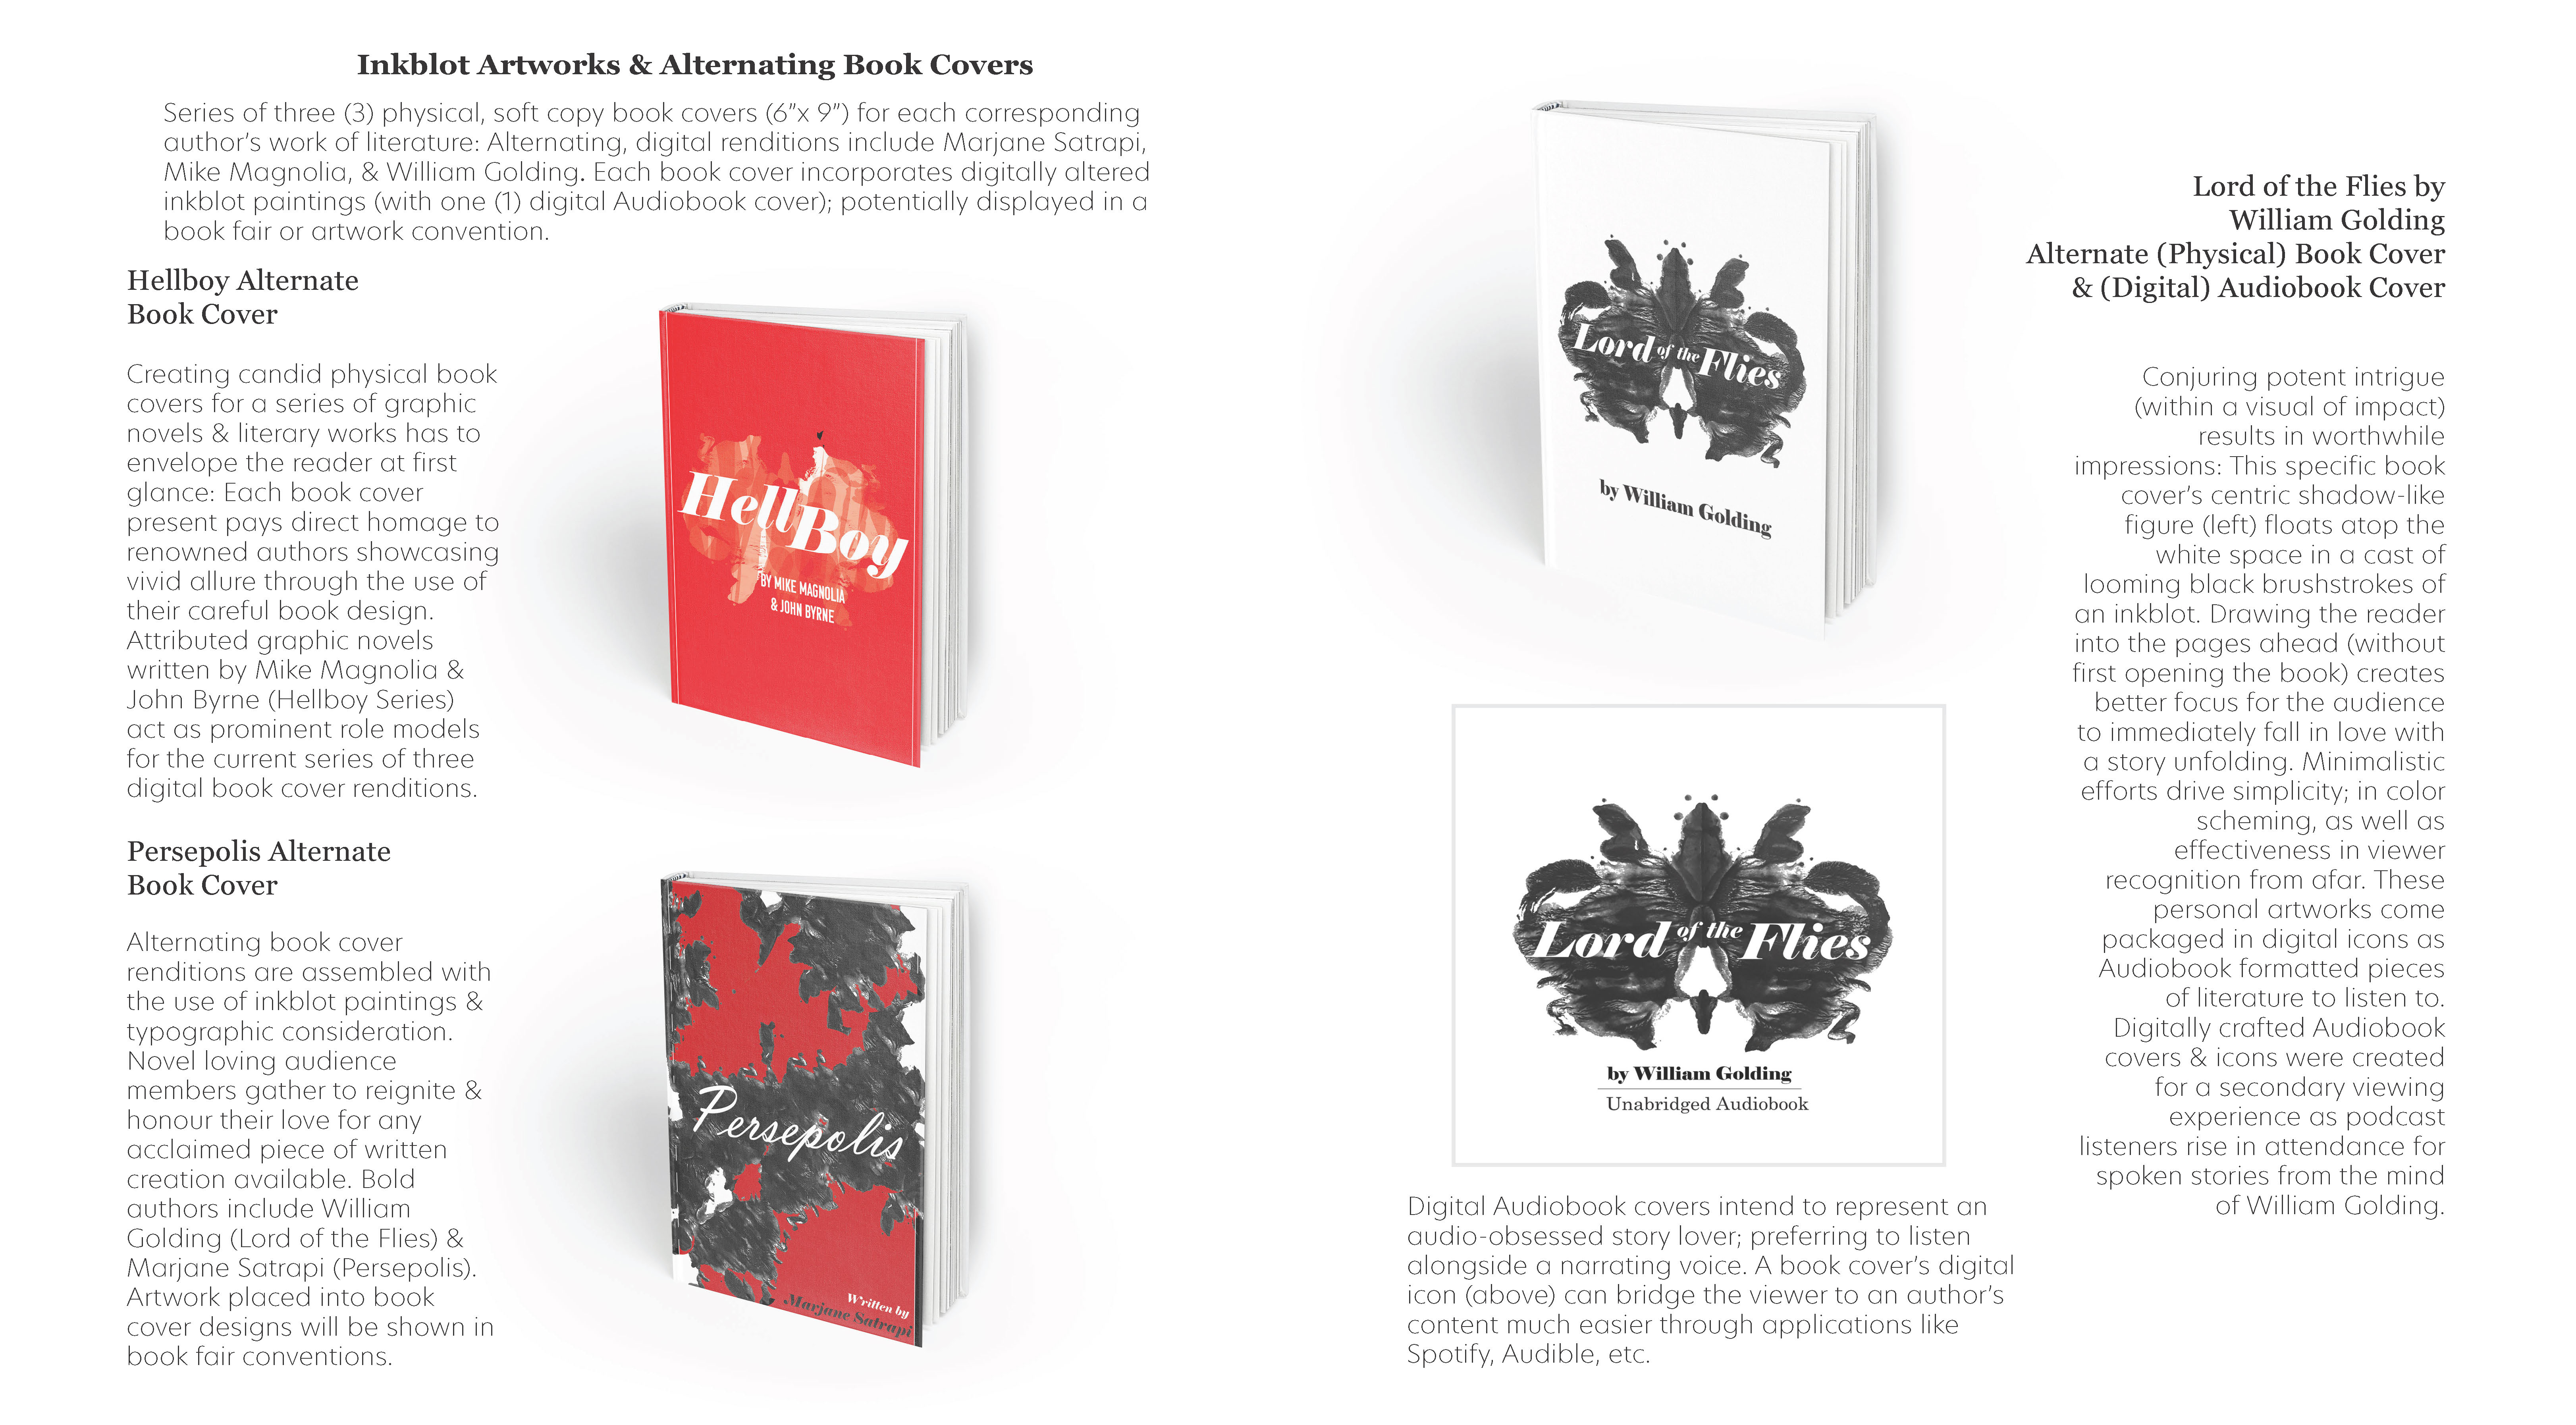 Alternating Inkblot Artwork (Physical Book Covers + Digital Audiobook Covers)